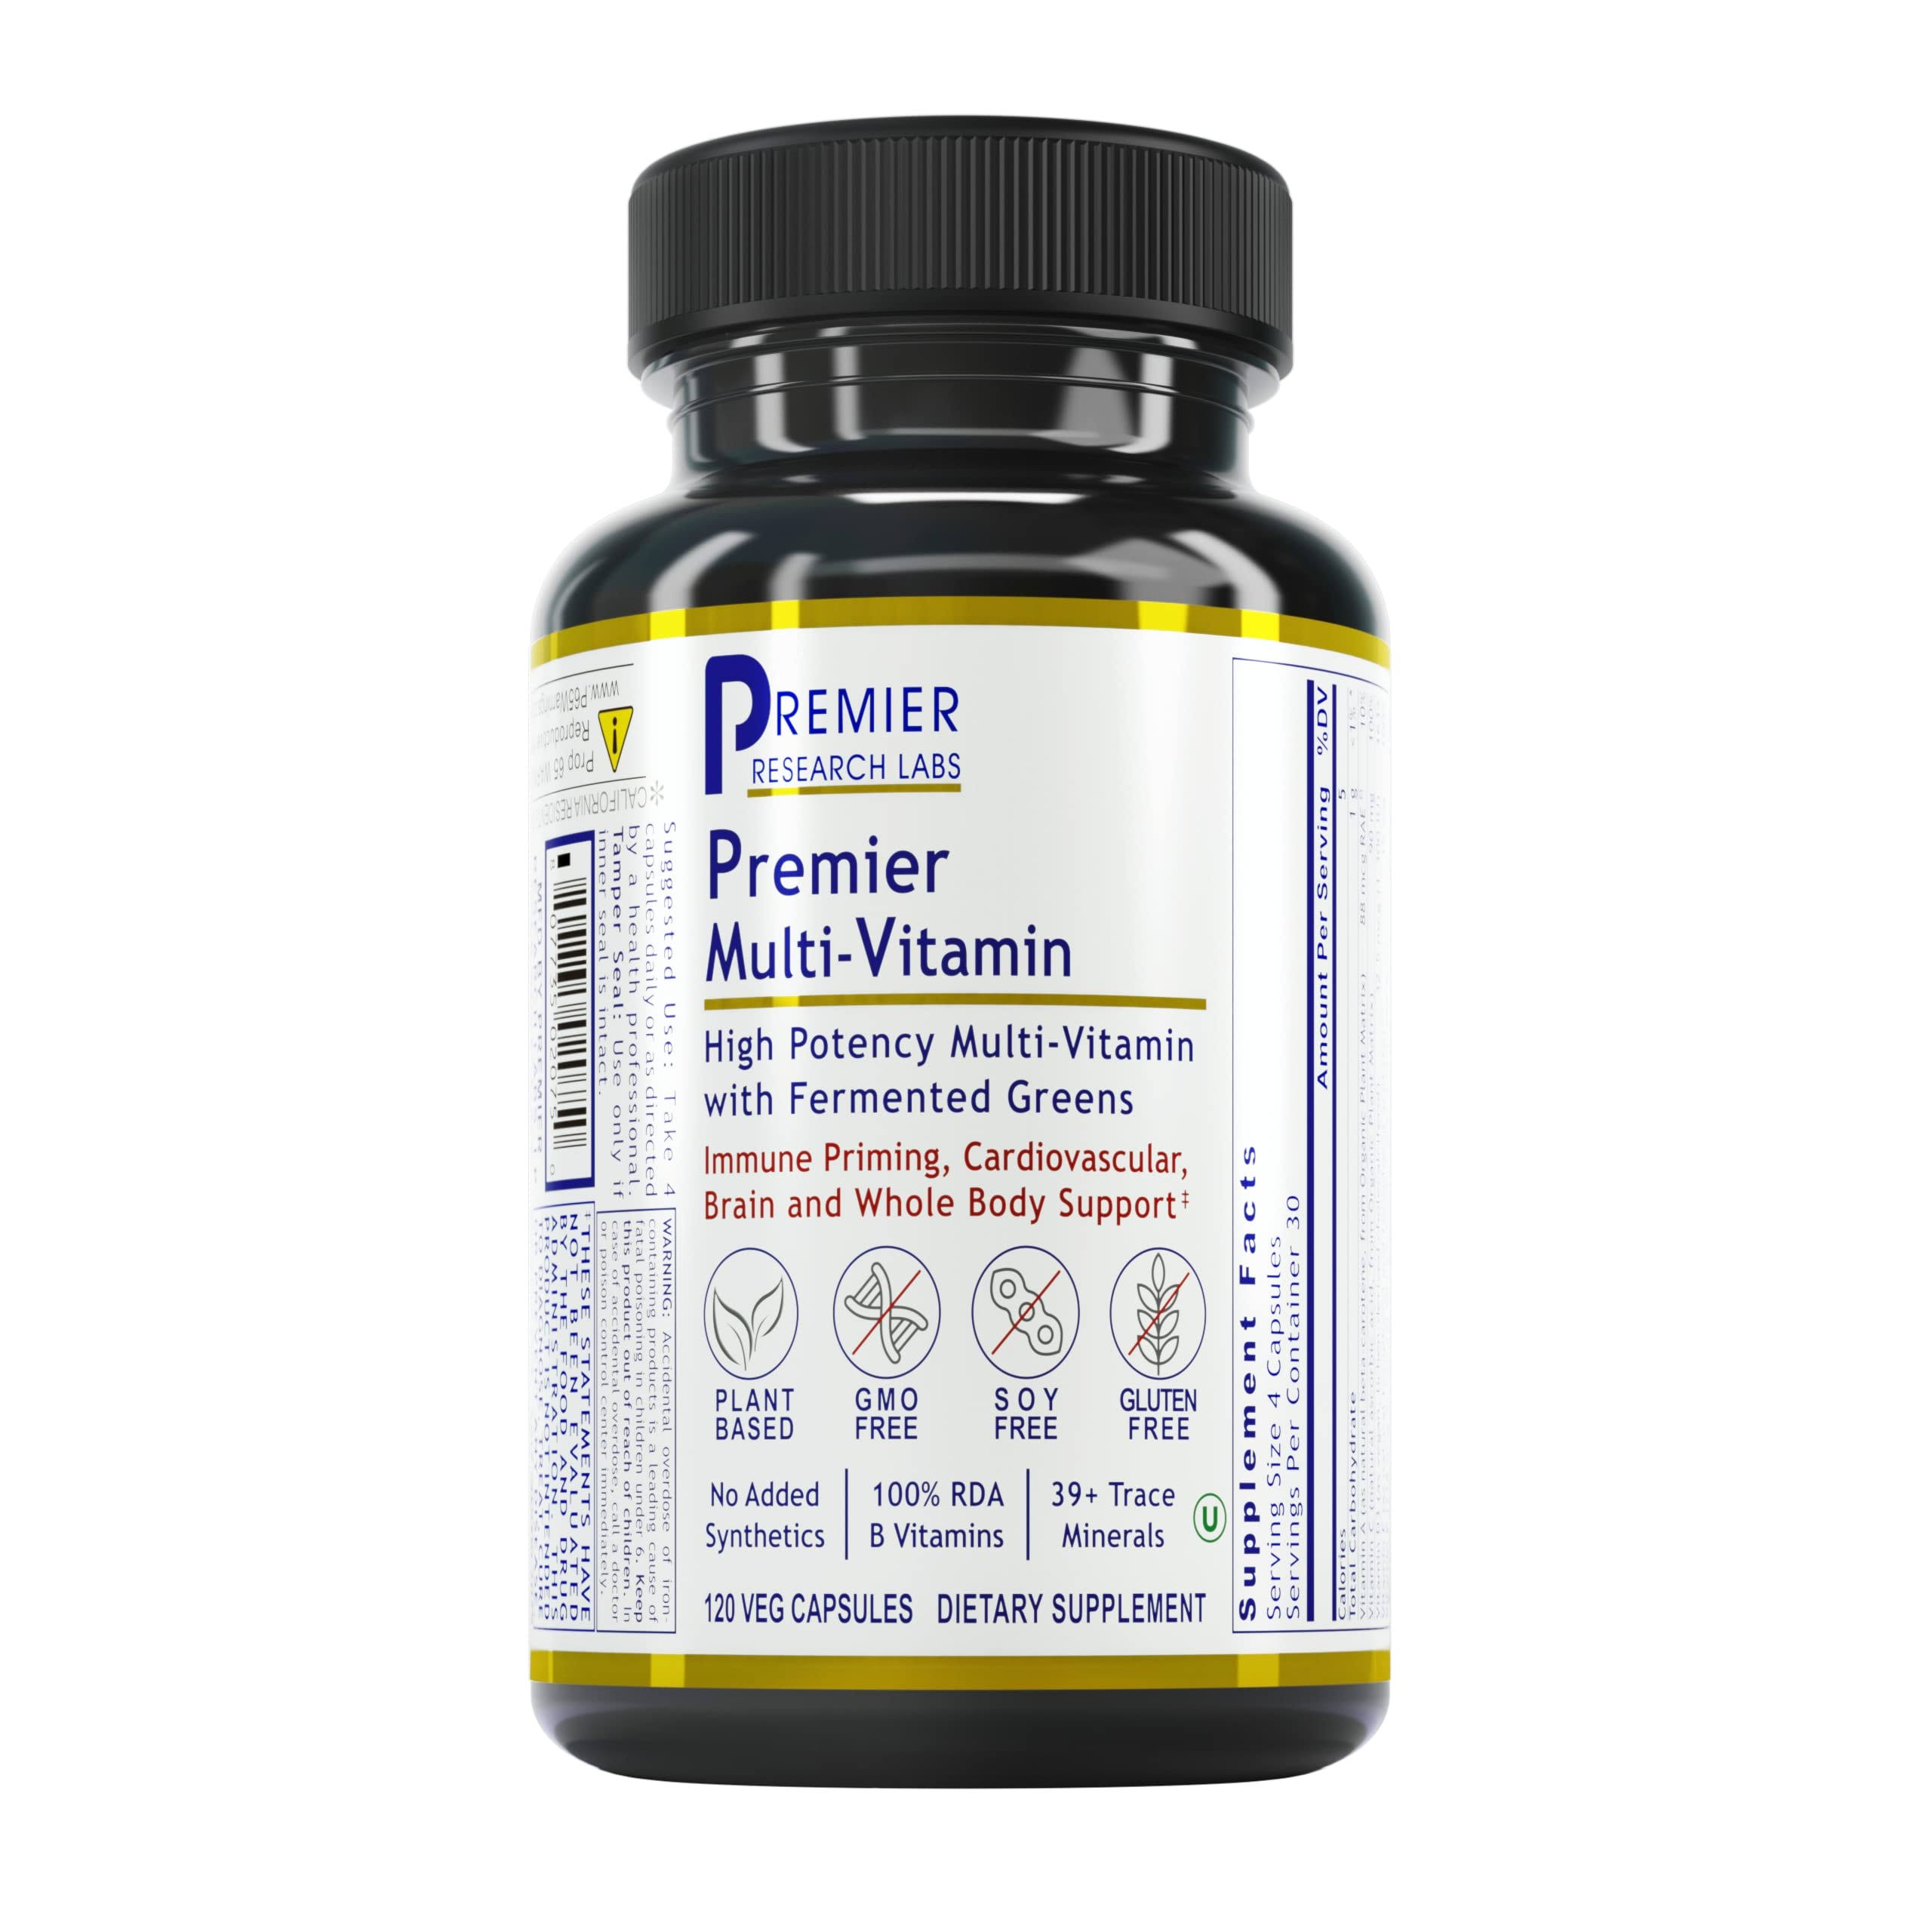 Premier Research Labs Multi-Vitamin - 120 Veg Capsules